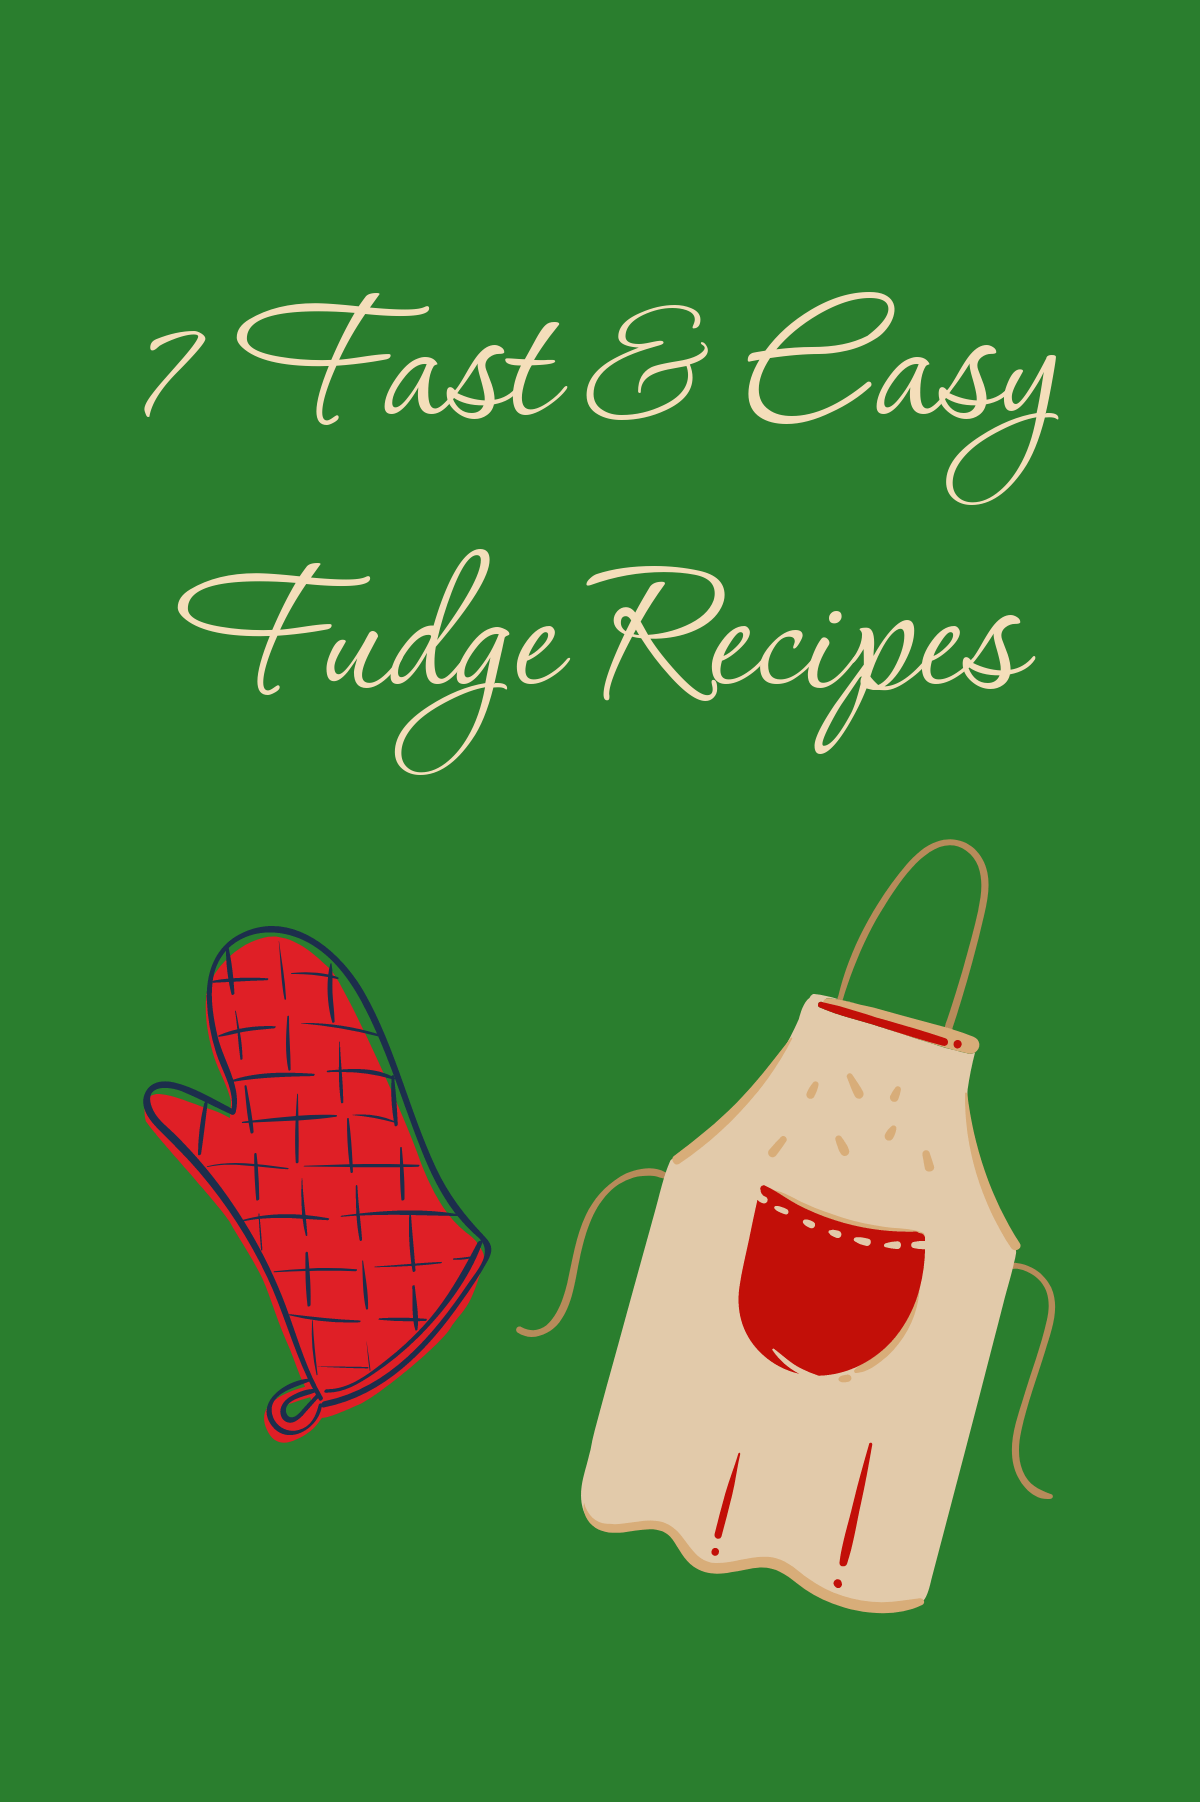 7 Fast & Easy Fudge Recipes